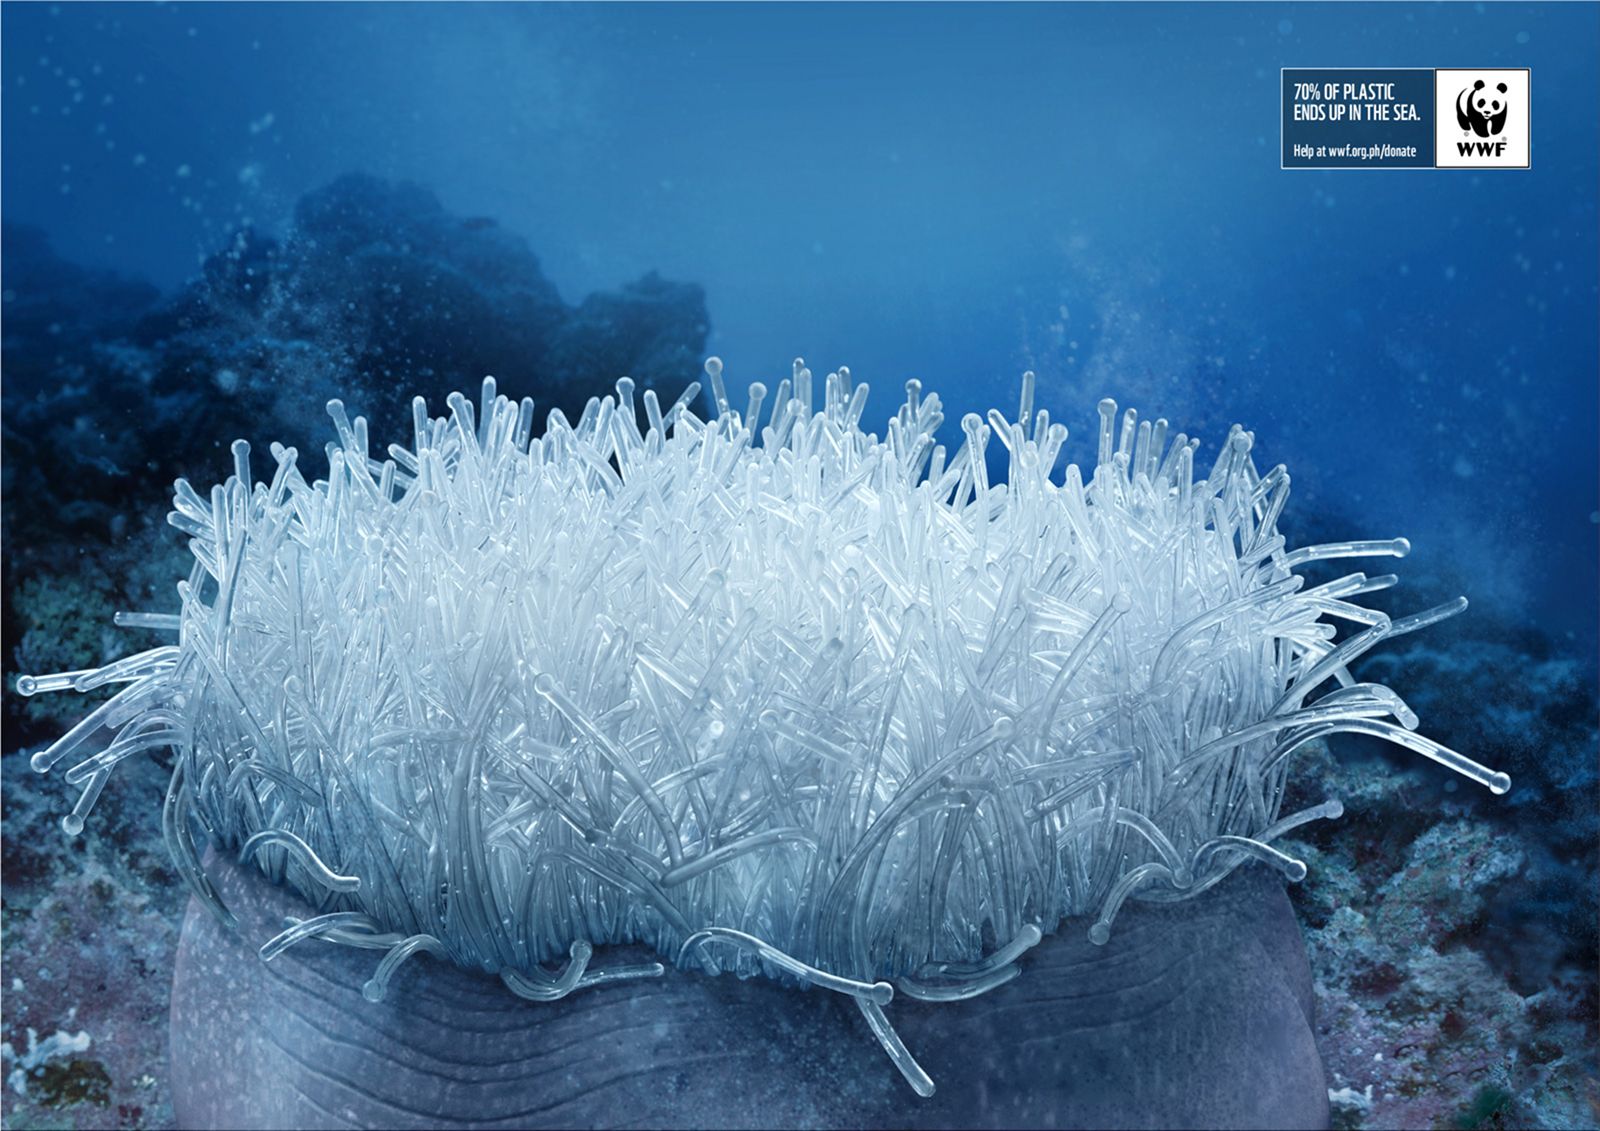 WWF-Marine-Protection-Campaign-print-ads-v26100